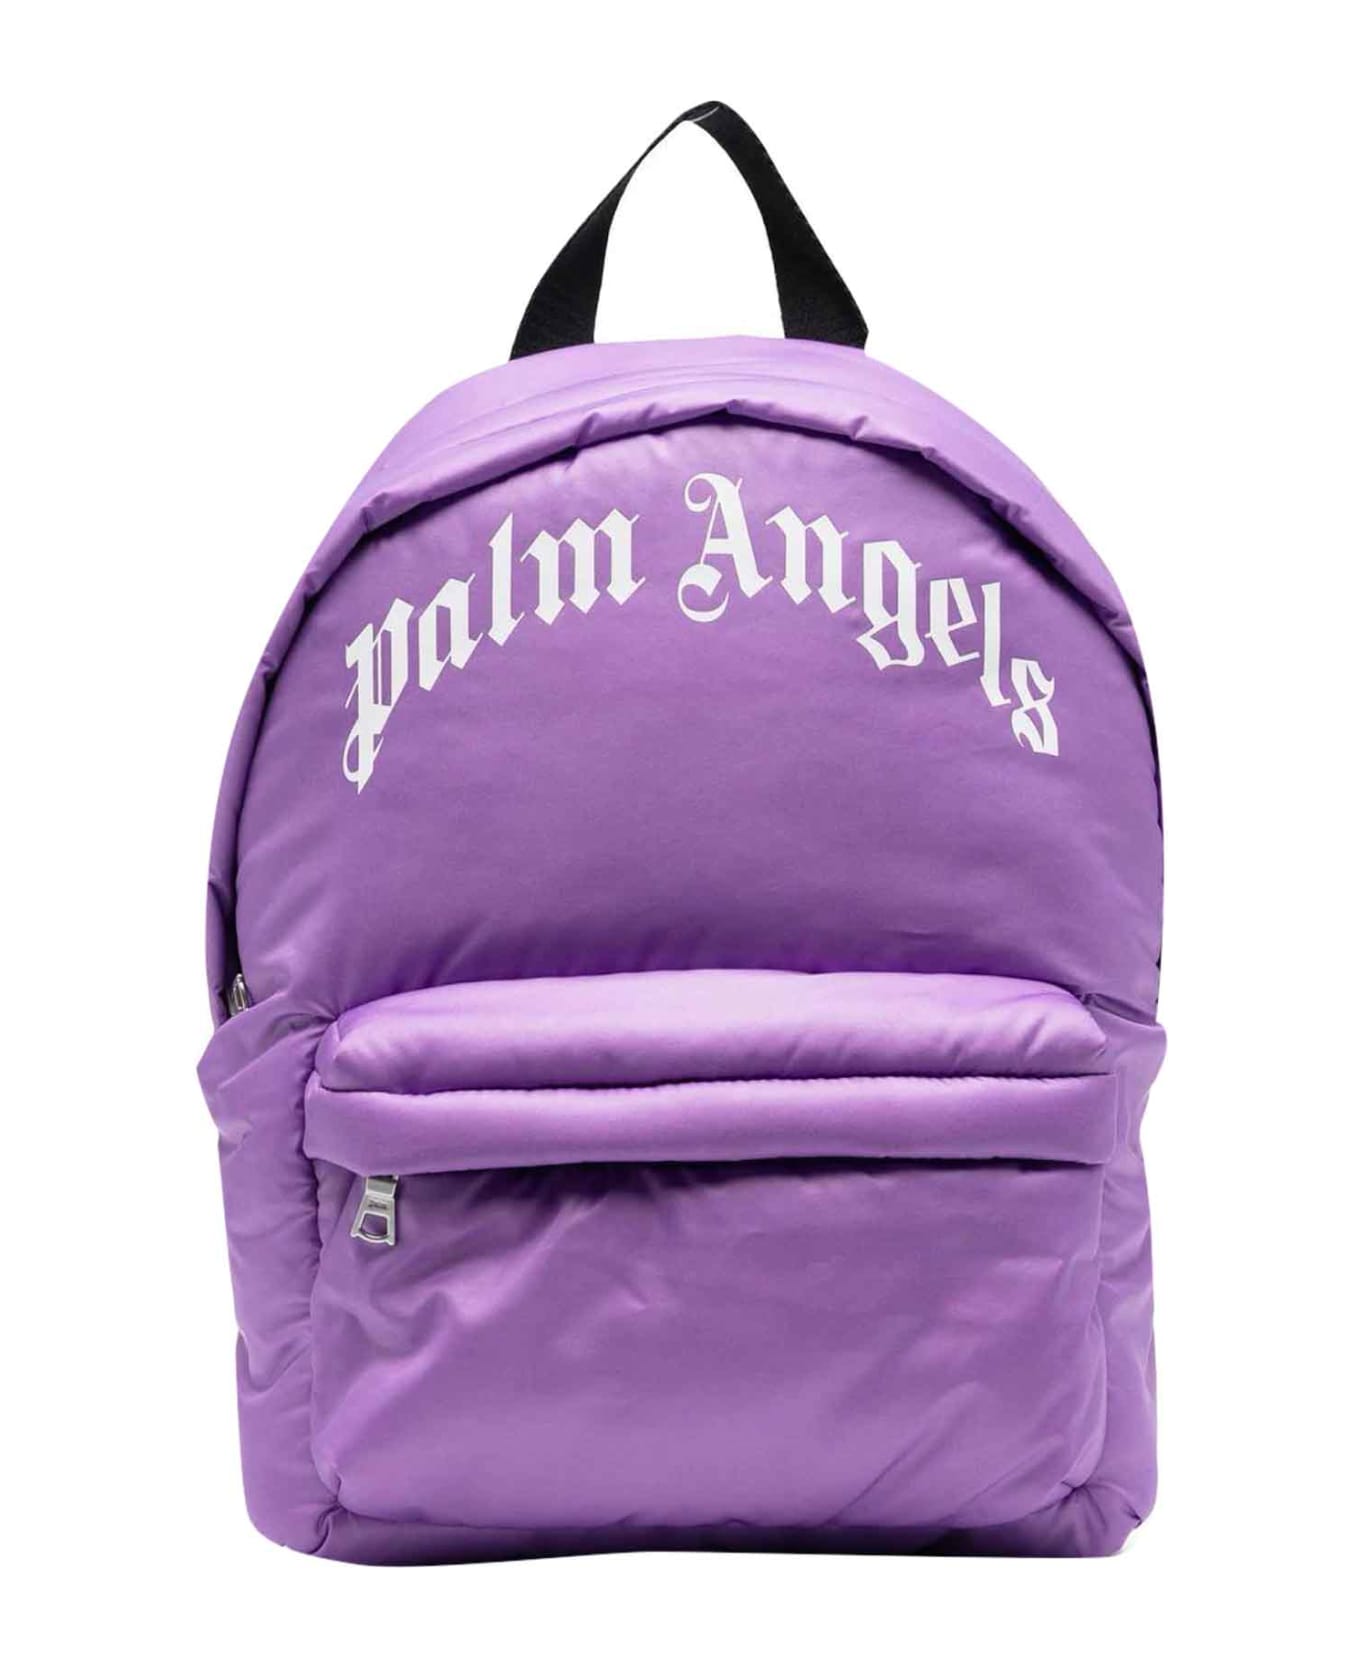 Palm Angels Purple Backpack Girl - Viola